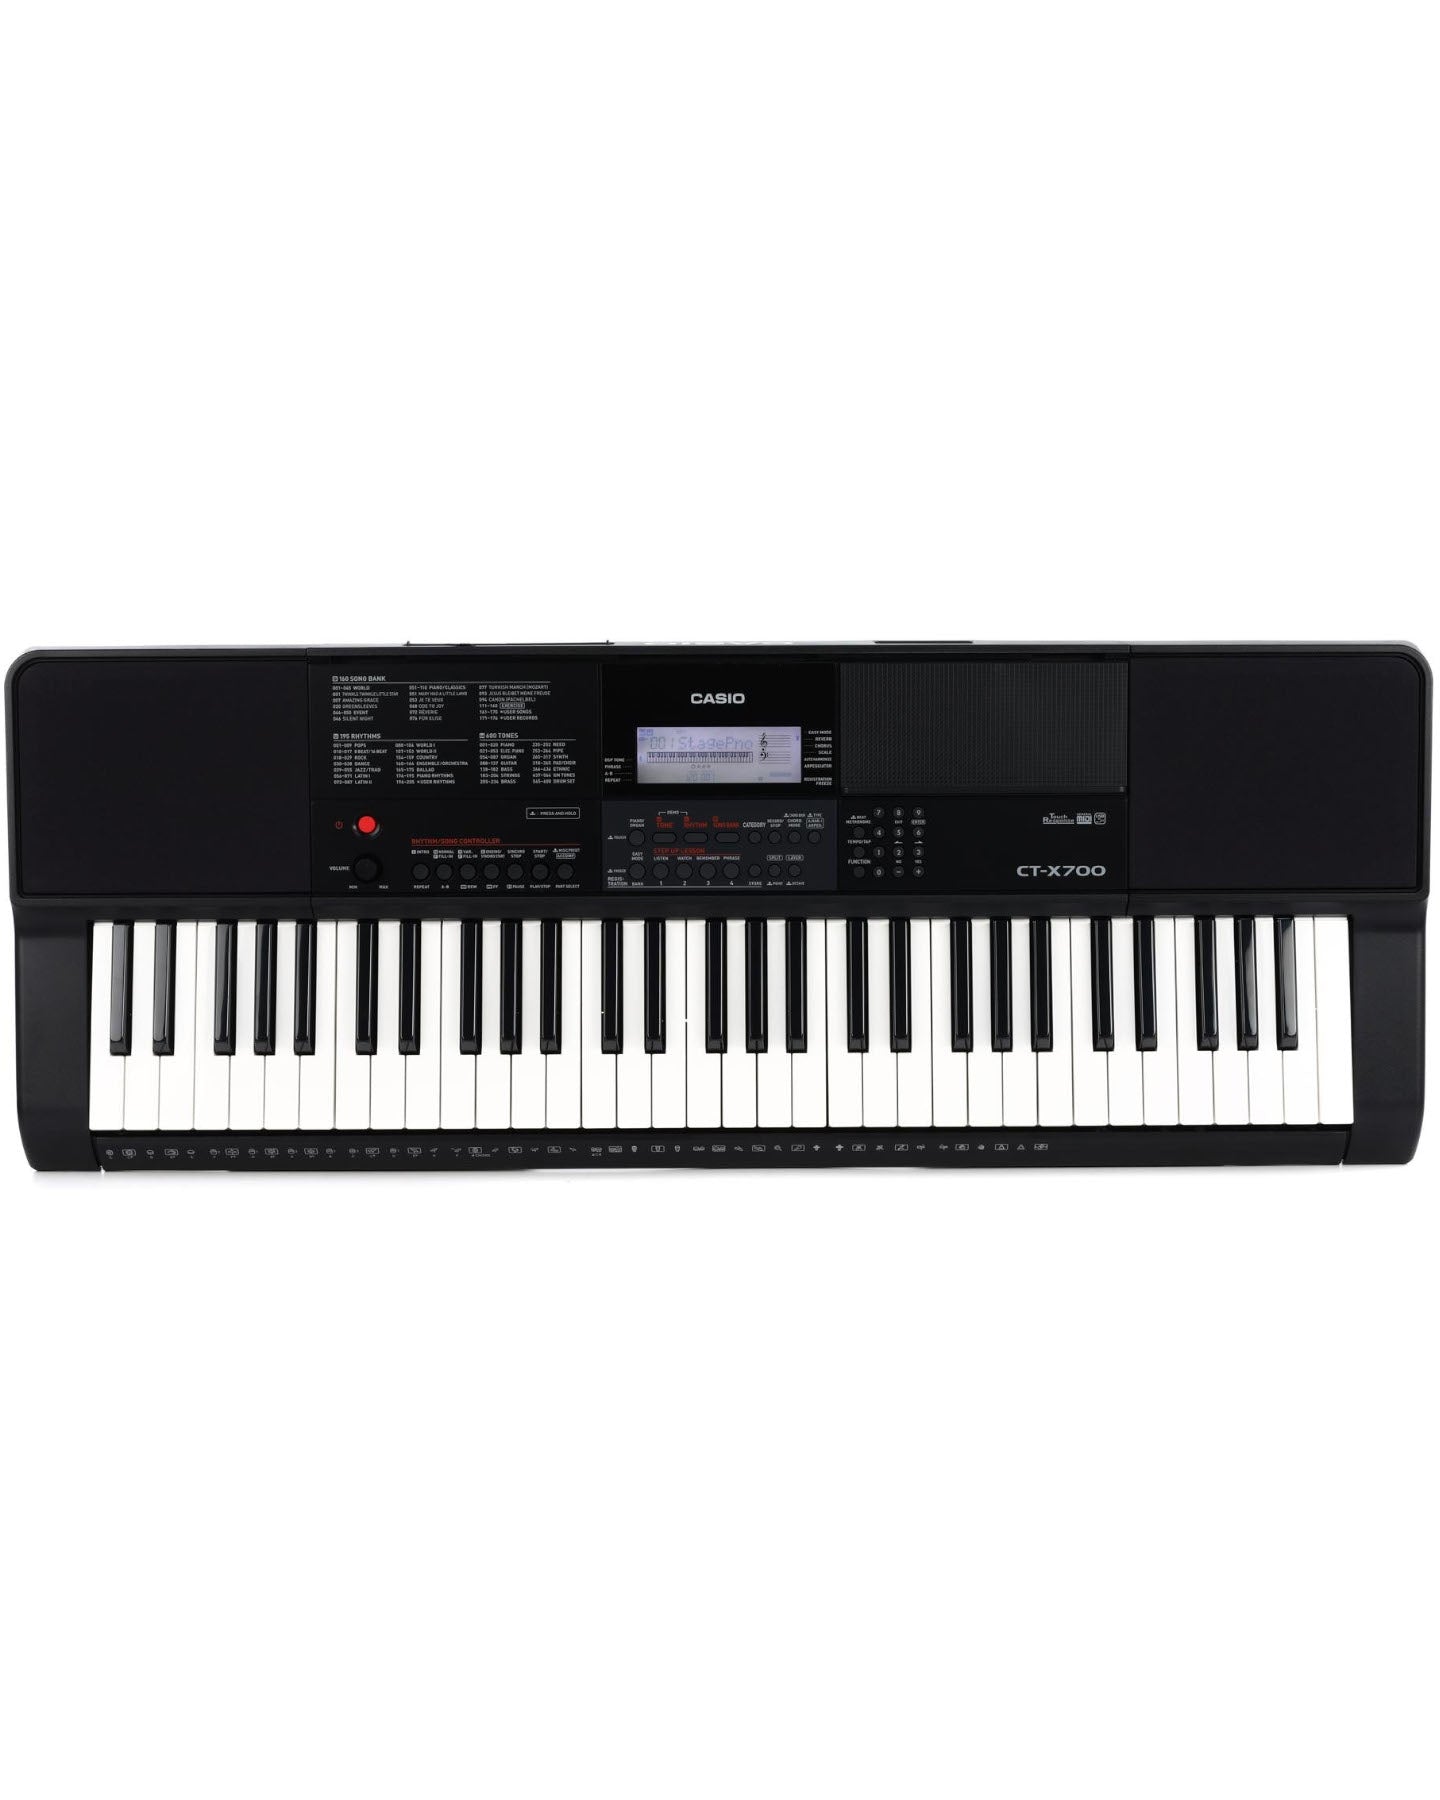 Casio CT-X700 61 Piano-Style Keys with AiX Tone Generator